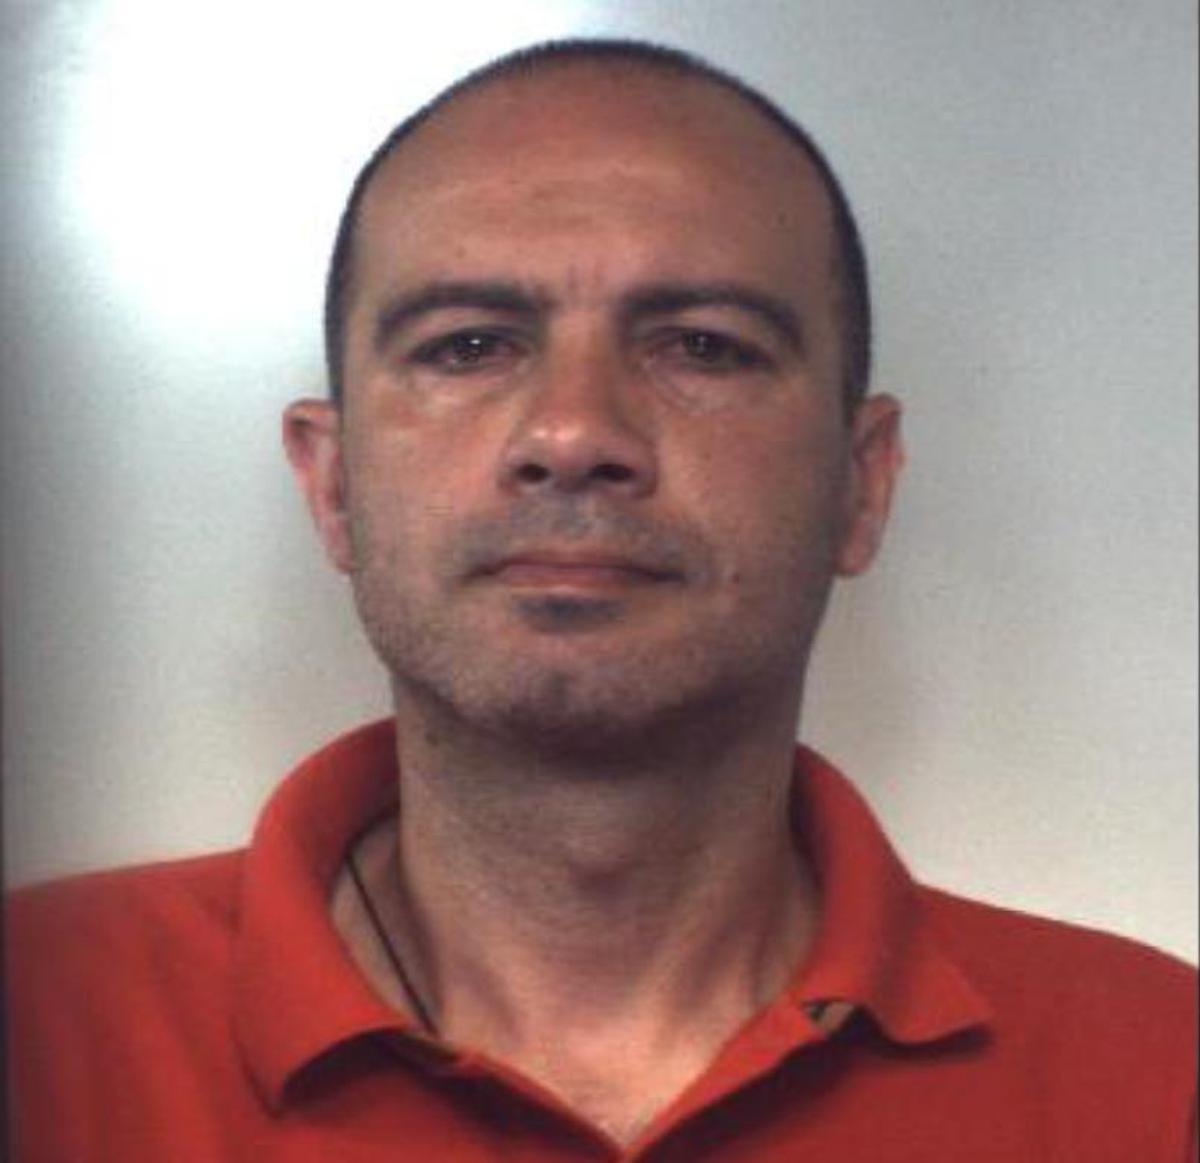 Foto de la ficha policial de Pasquale Bonavota, miembro de la 'Ndrangheta buscado por Italia en toda Europa.